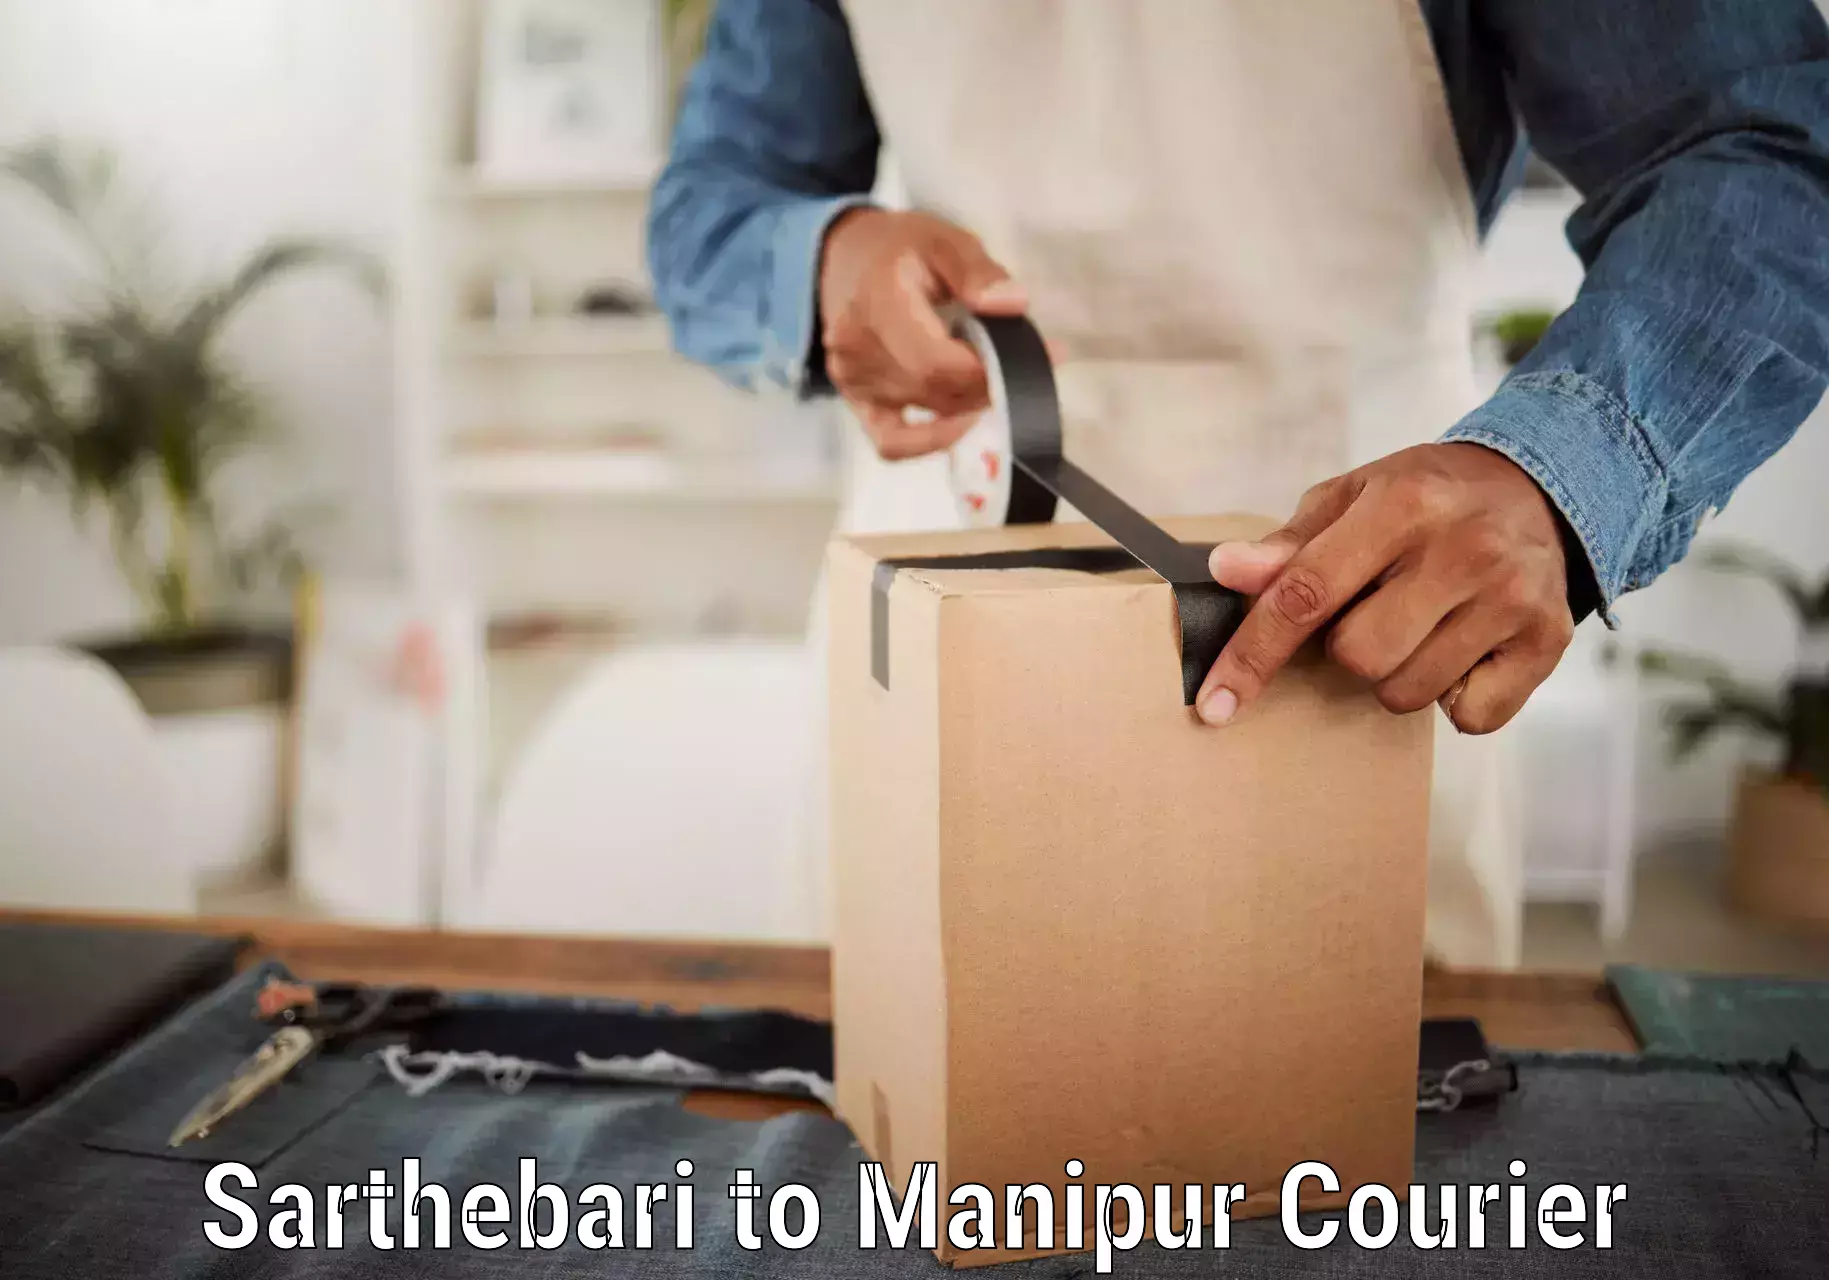 Professional courier handling Sarthebari to Manipur